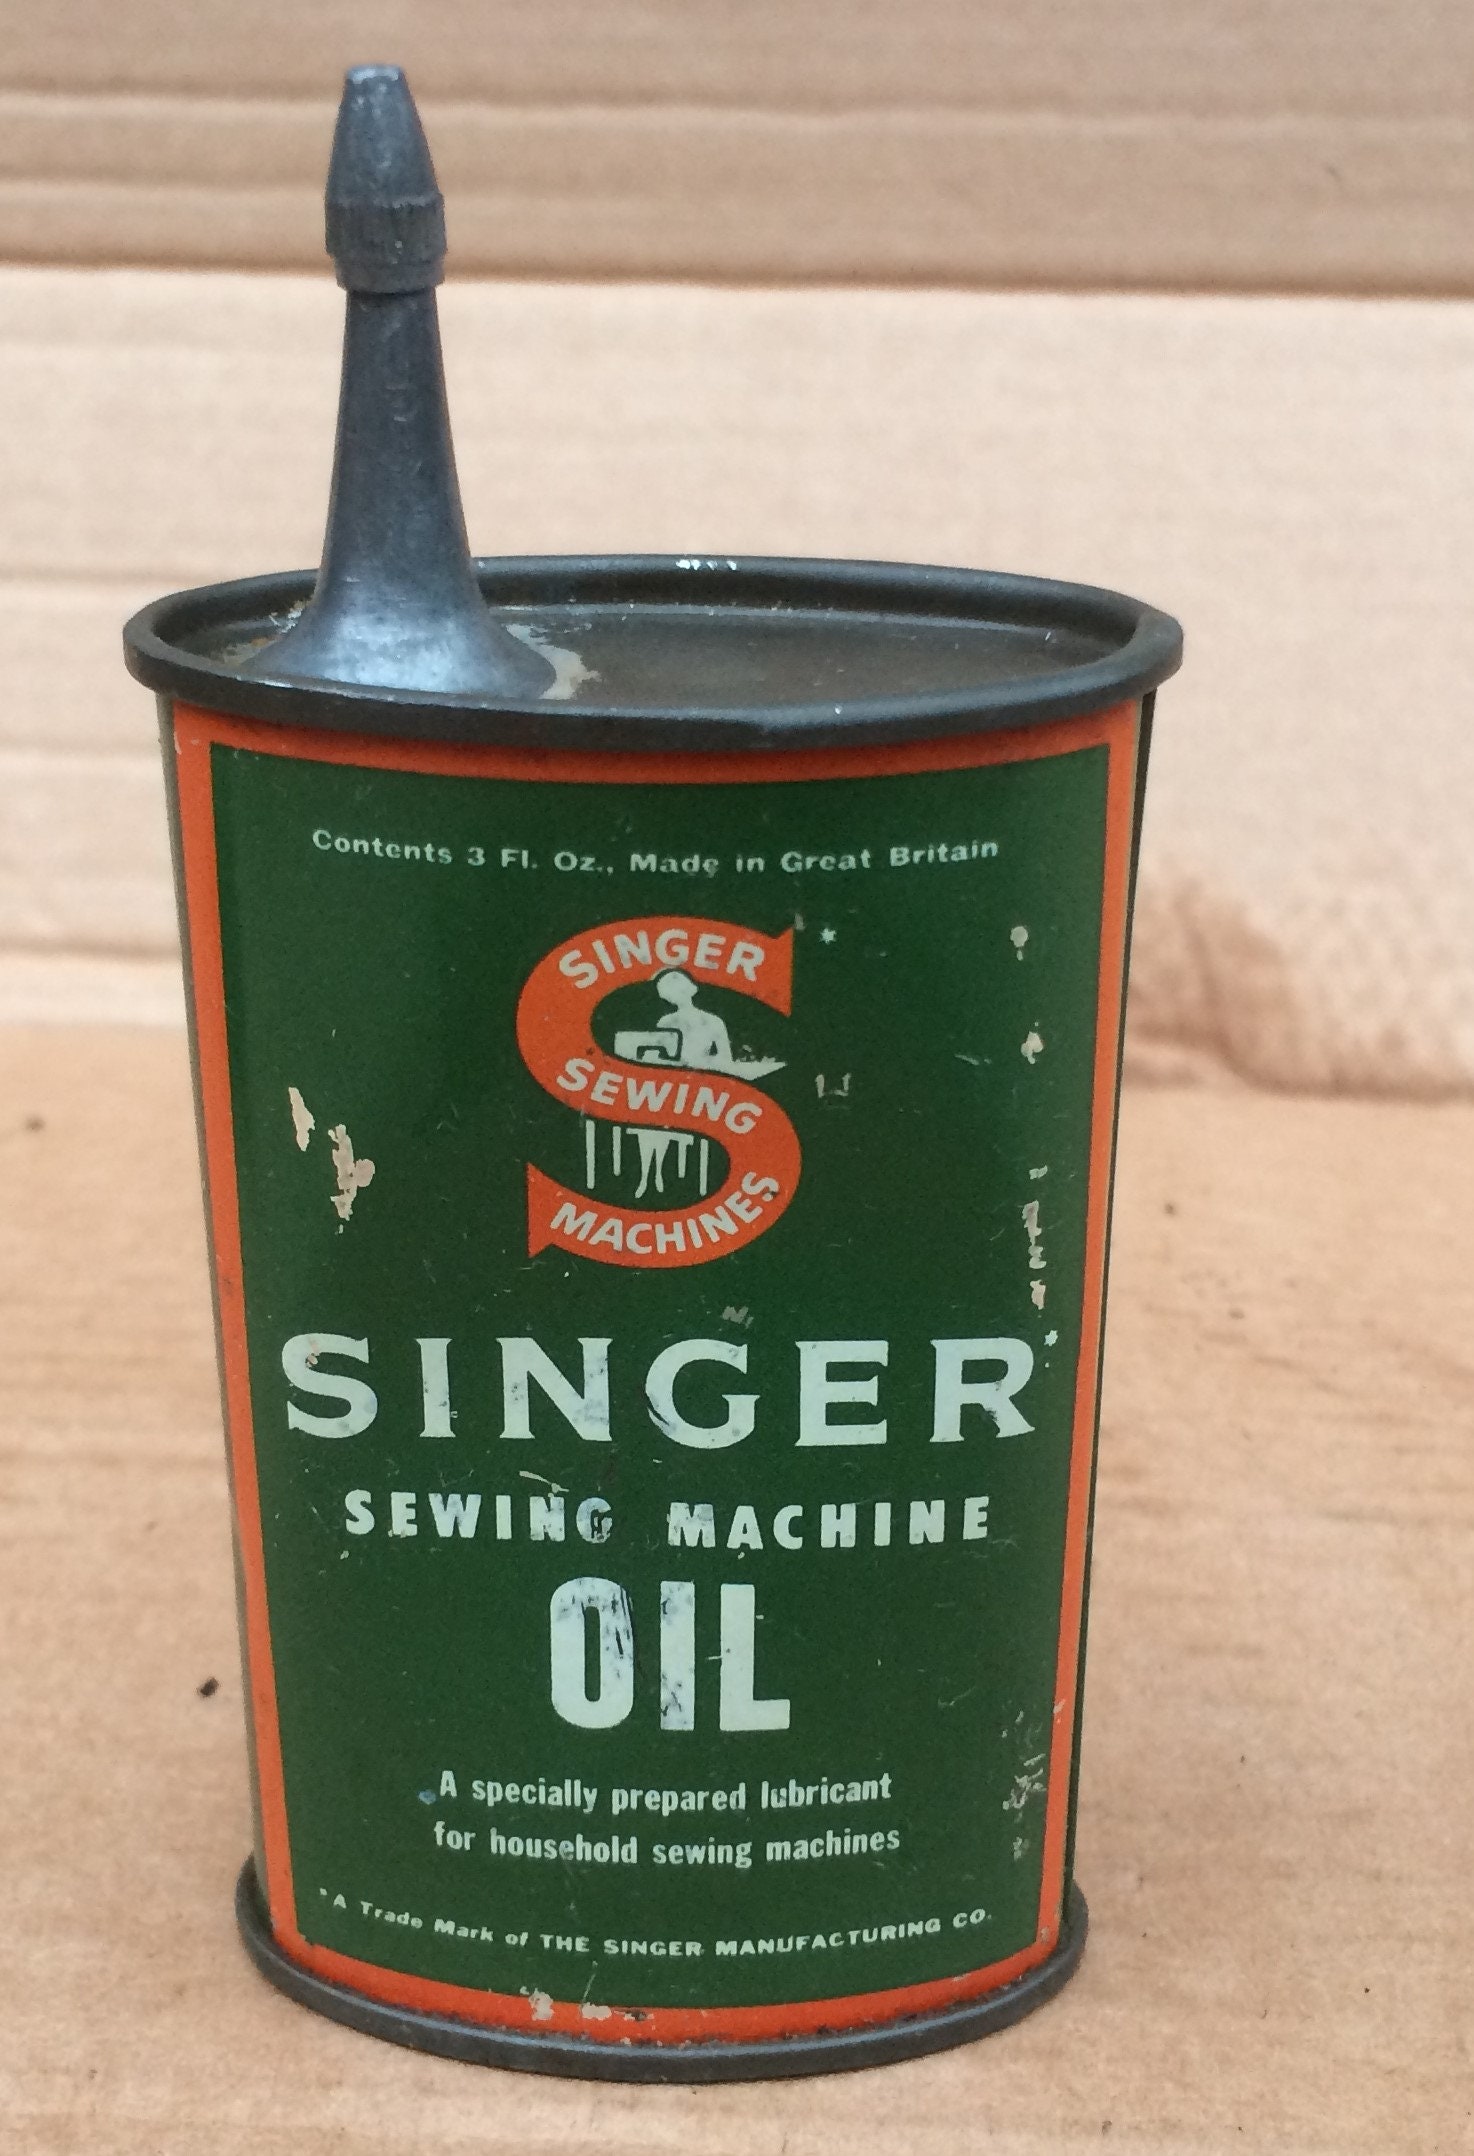 SINGER Industrial Sewing Machine Oil - 1 Liter (33.8 Oz.) All Purpose Oil